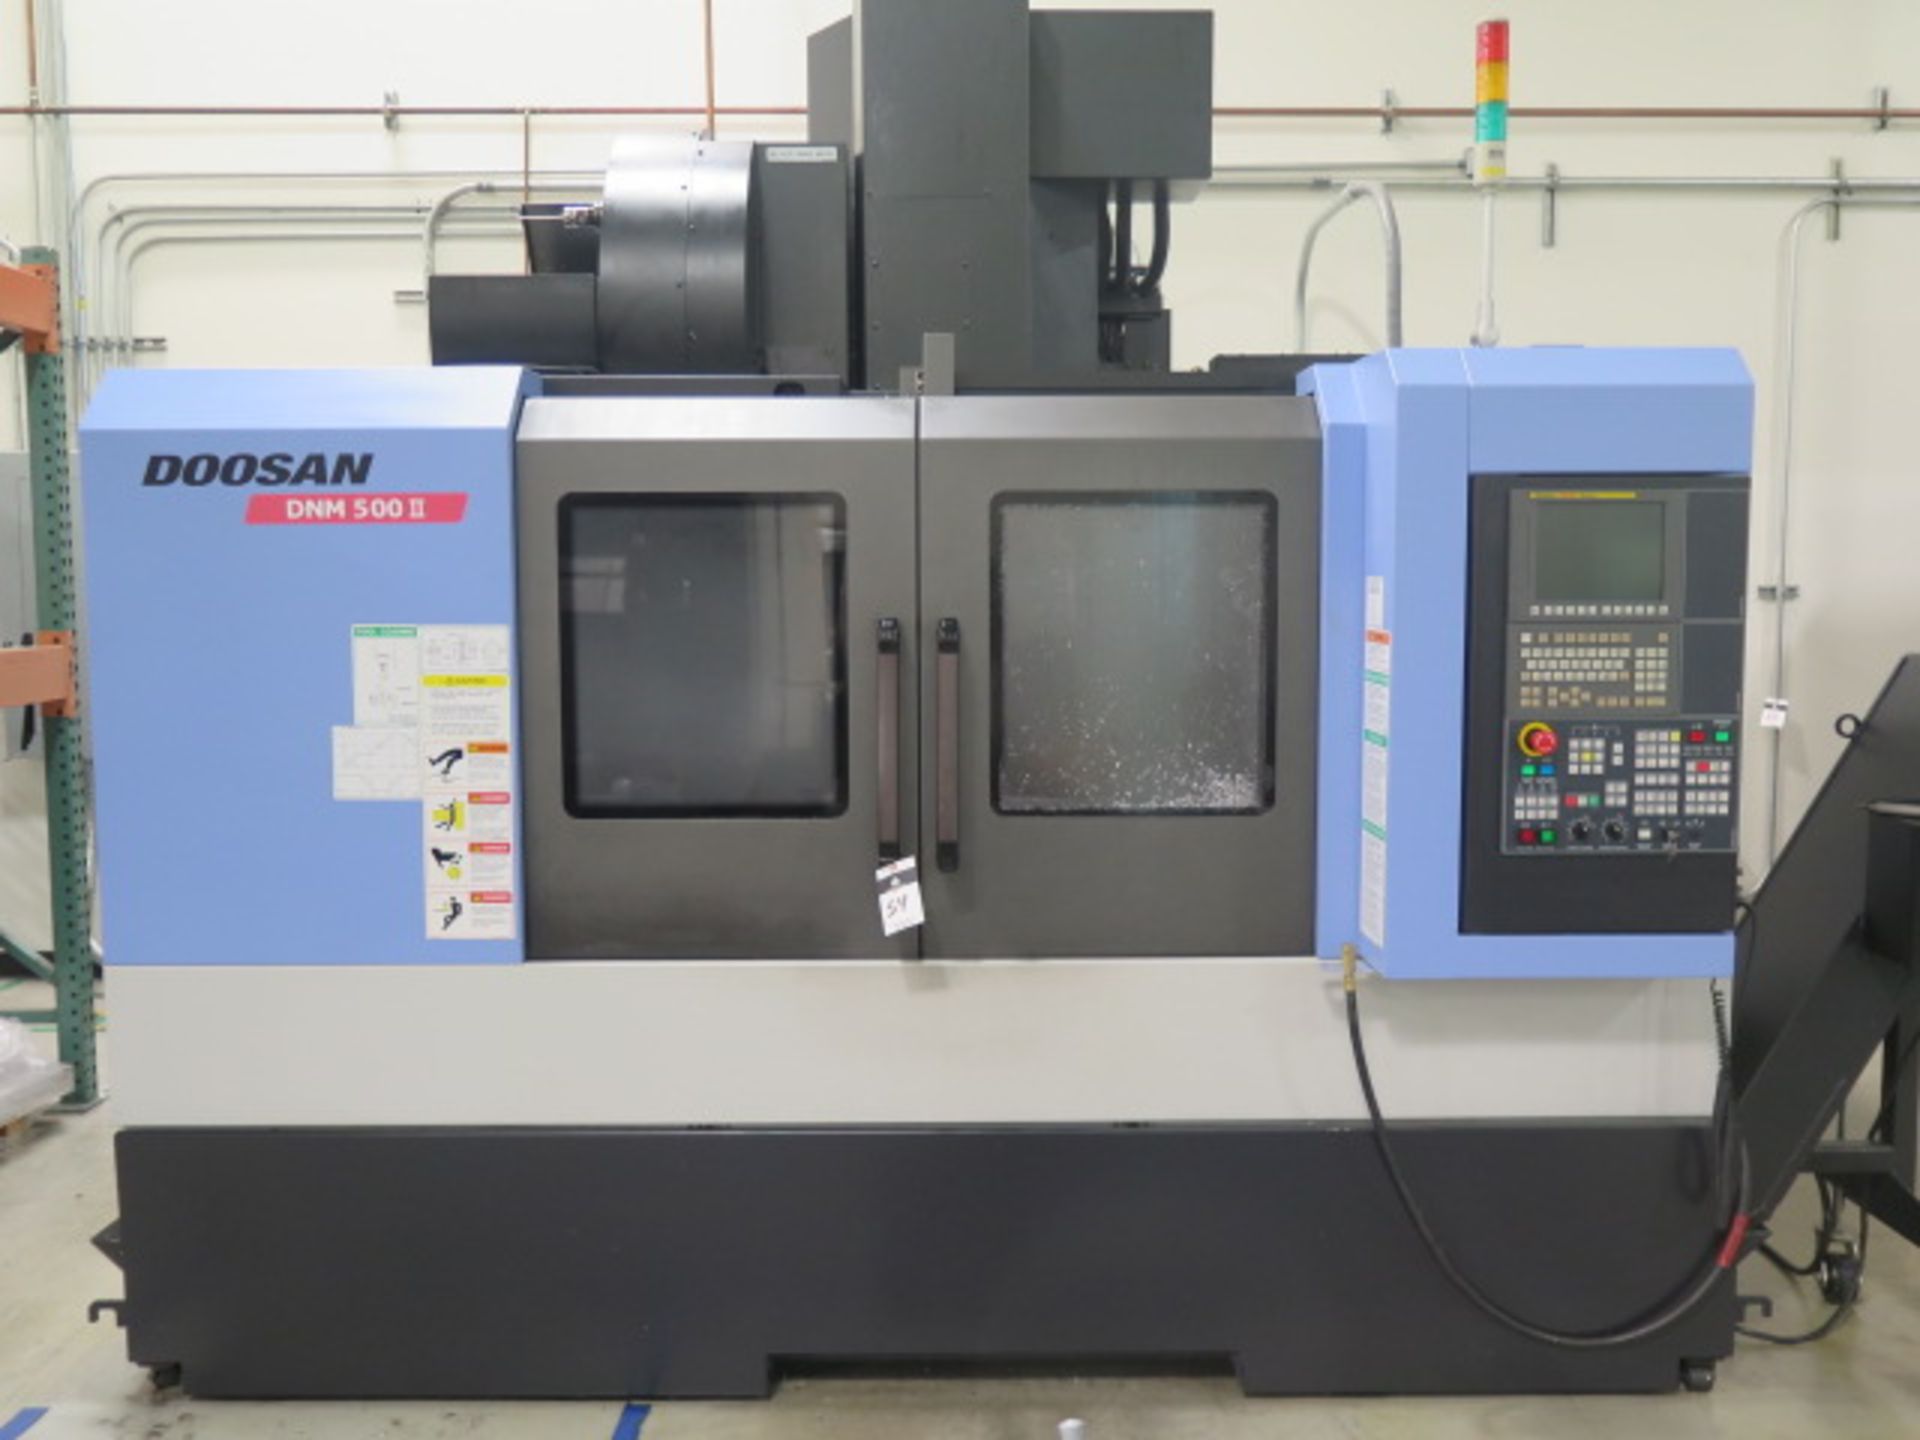 2013 Doosan DNM-500 II 4-Axis CNC Vertical Machining Center s/n MV0010-002320 w/ Fanuc Series 0i-